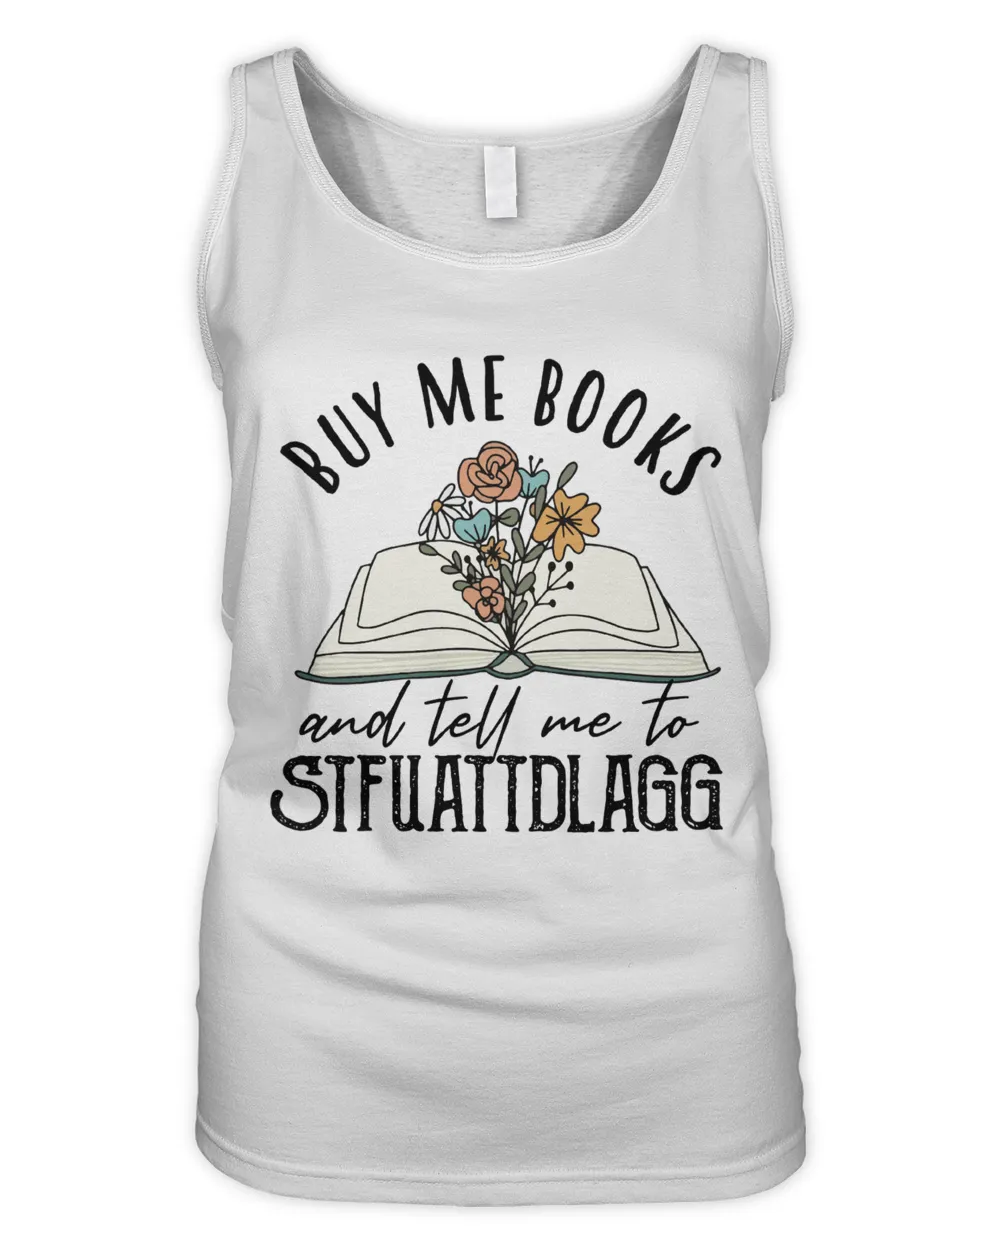 Book Nerd Gift Me To Stfuattdlagg Shirt